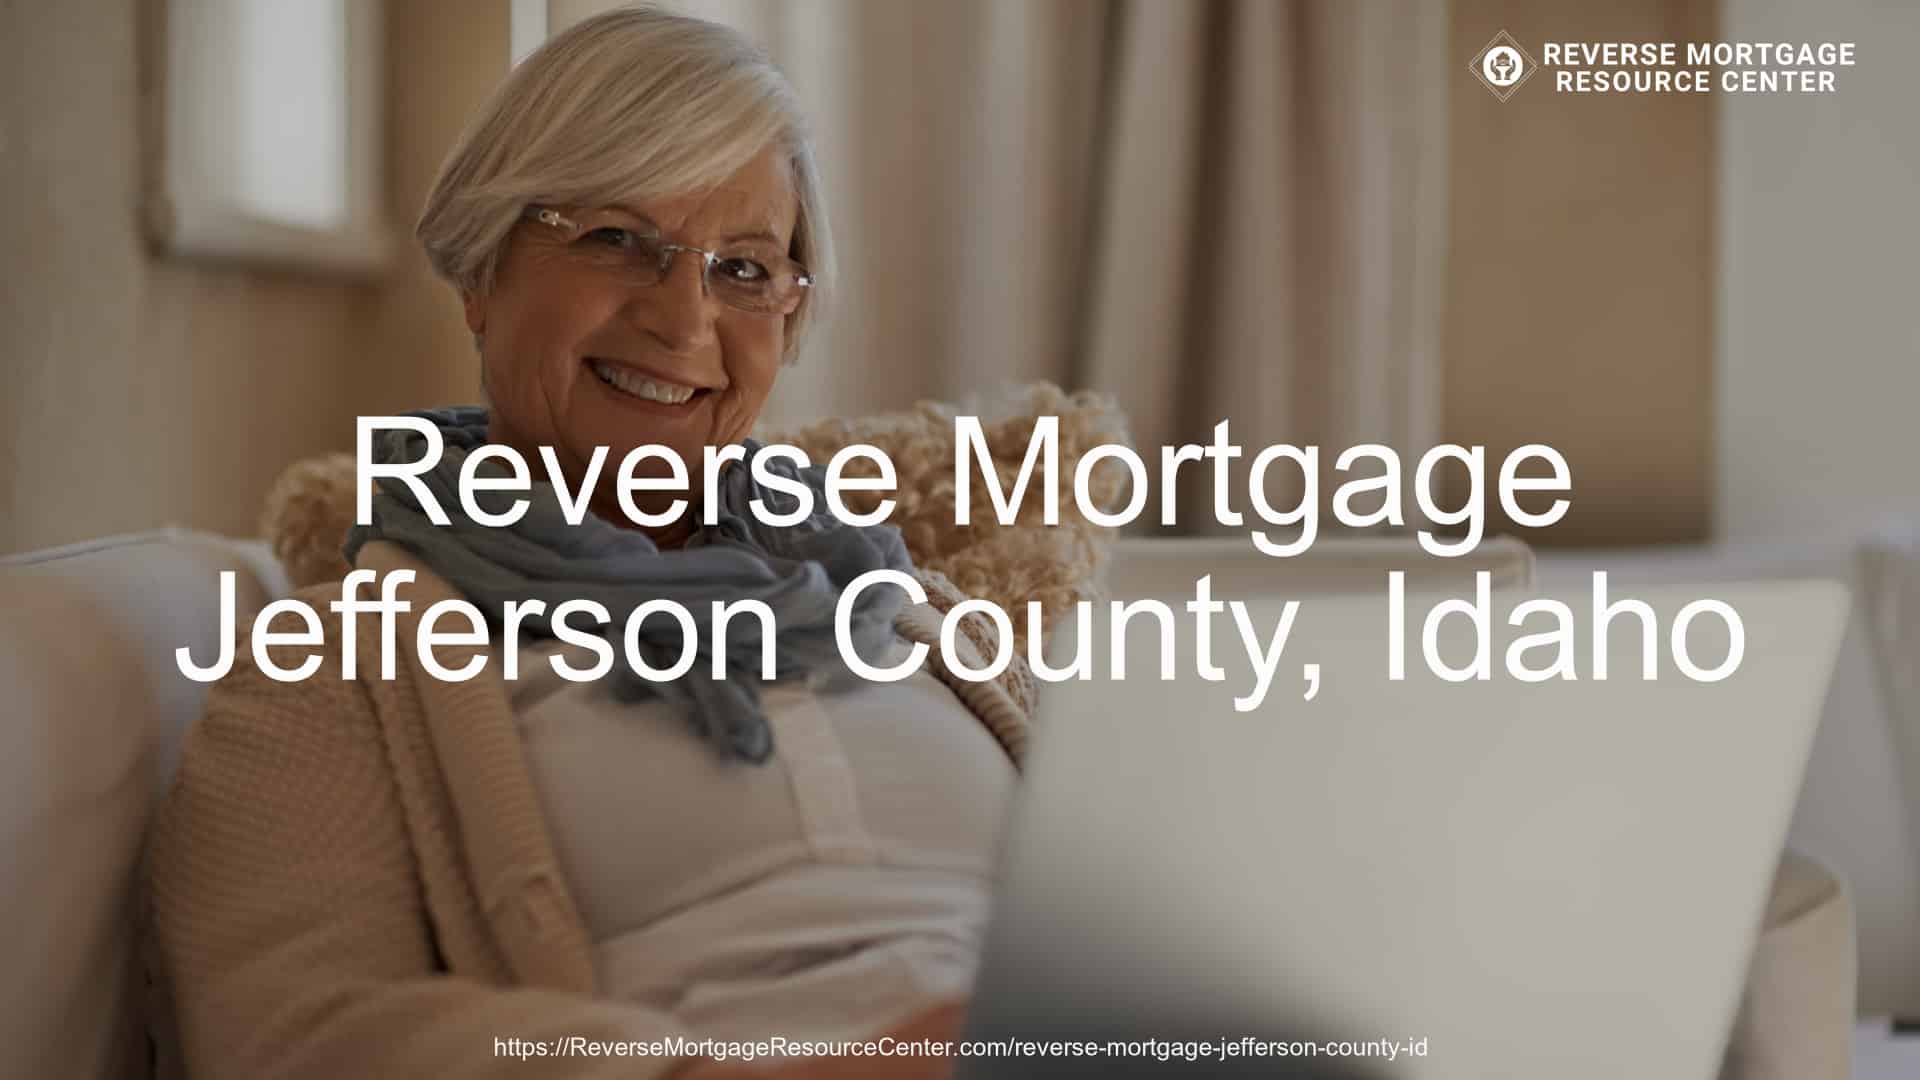 Reverse Mortgage Loans in Jefferson County Idaho